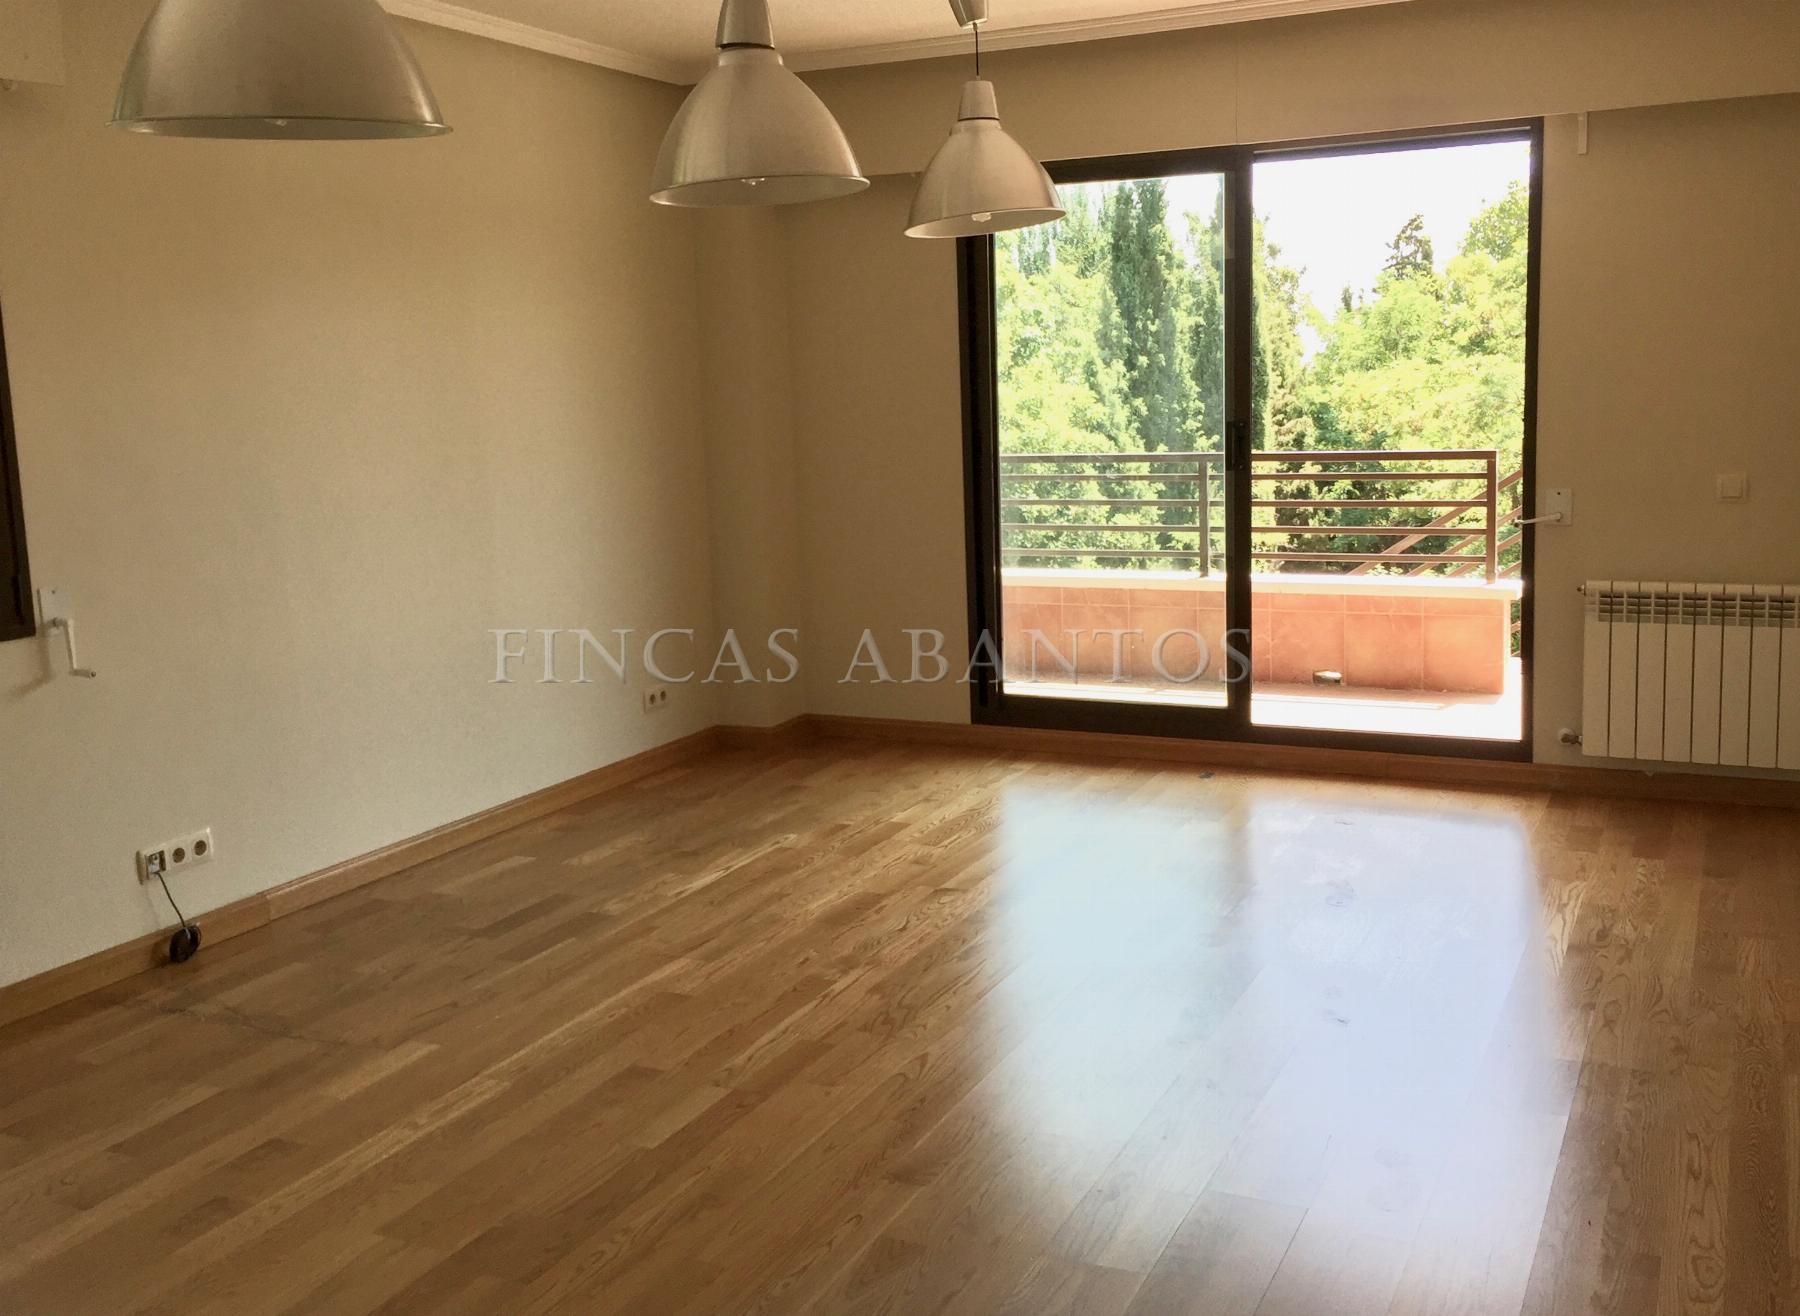 For sale of flat in El Escorial